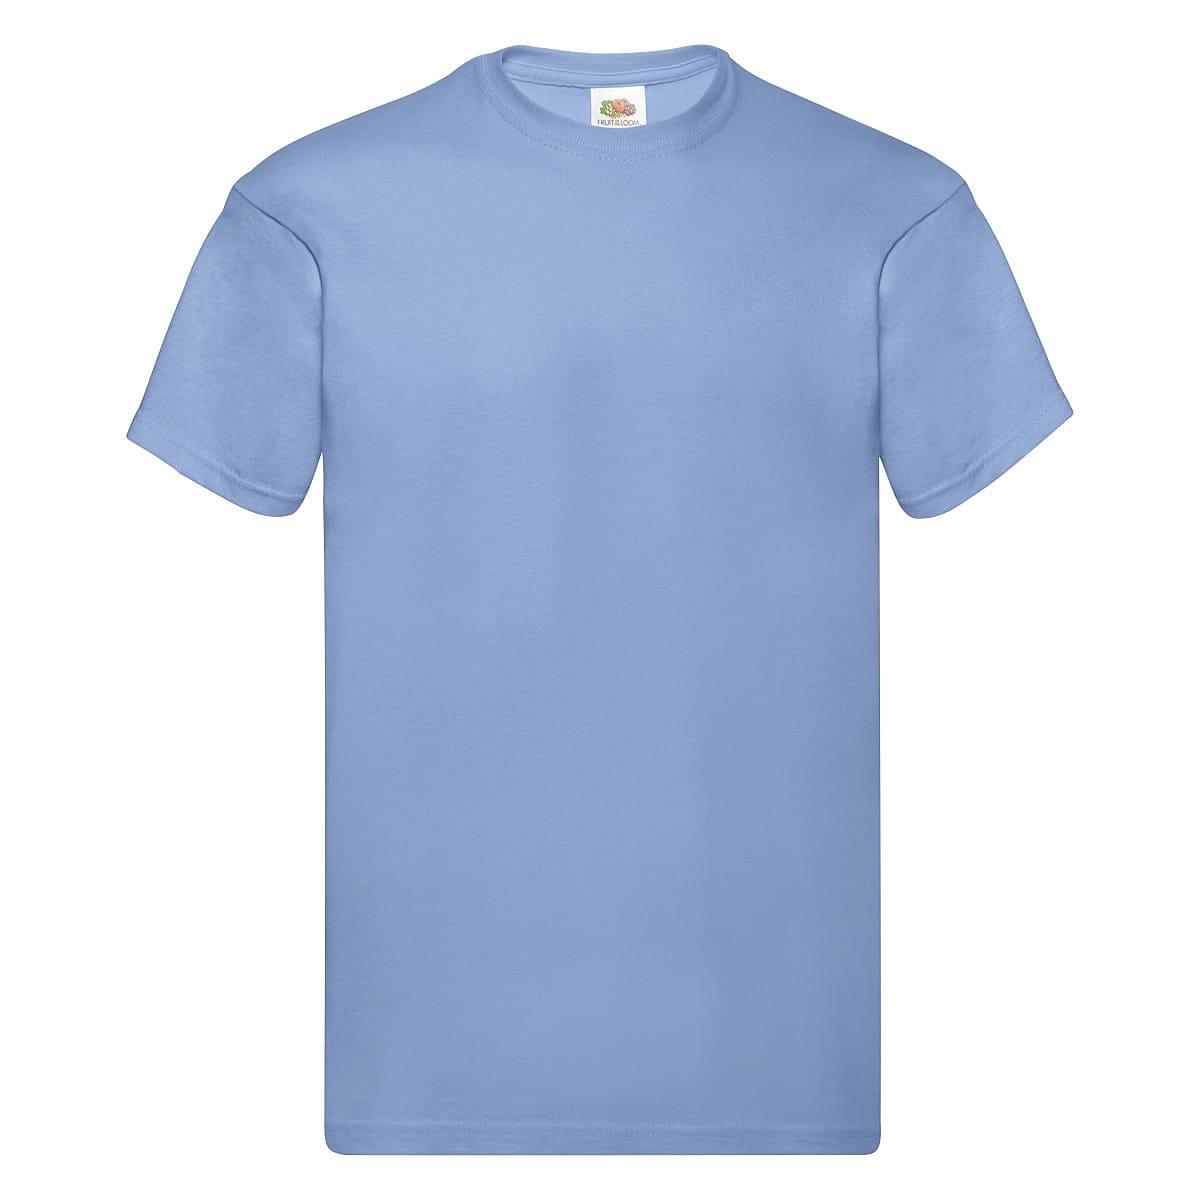 Fruit Of The Loom Original Full Cut T-Shirt in Sky Blue (Product Code: 61082)